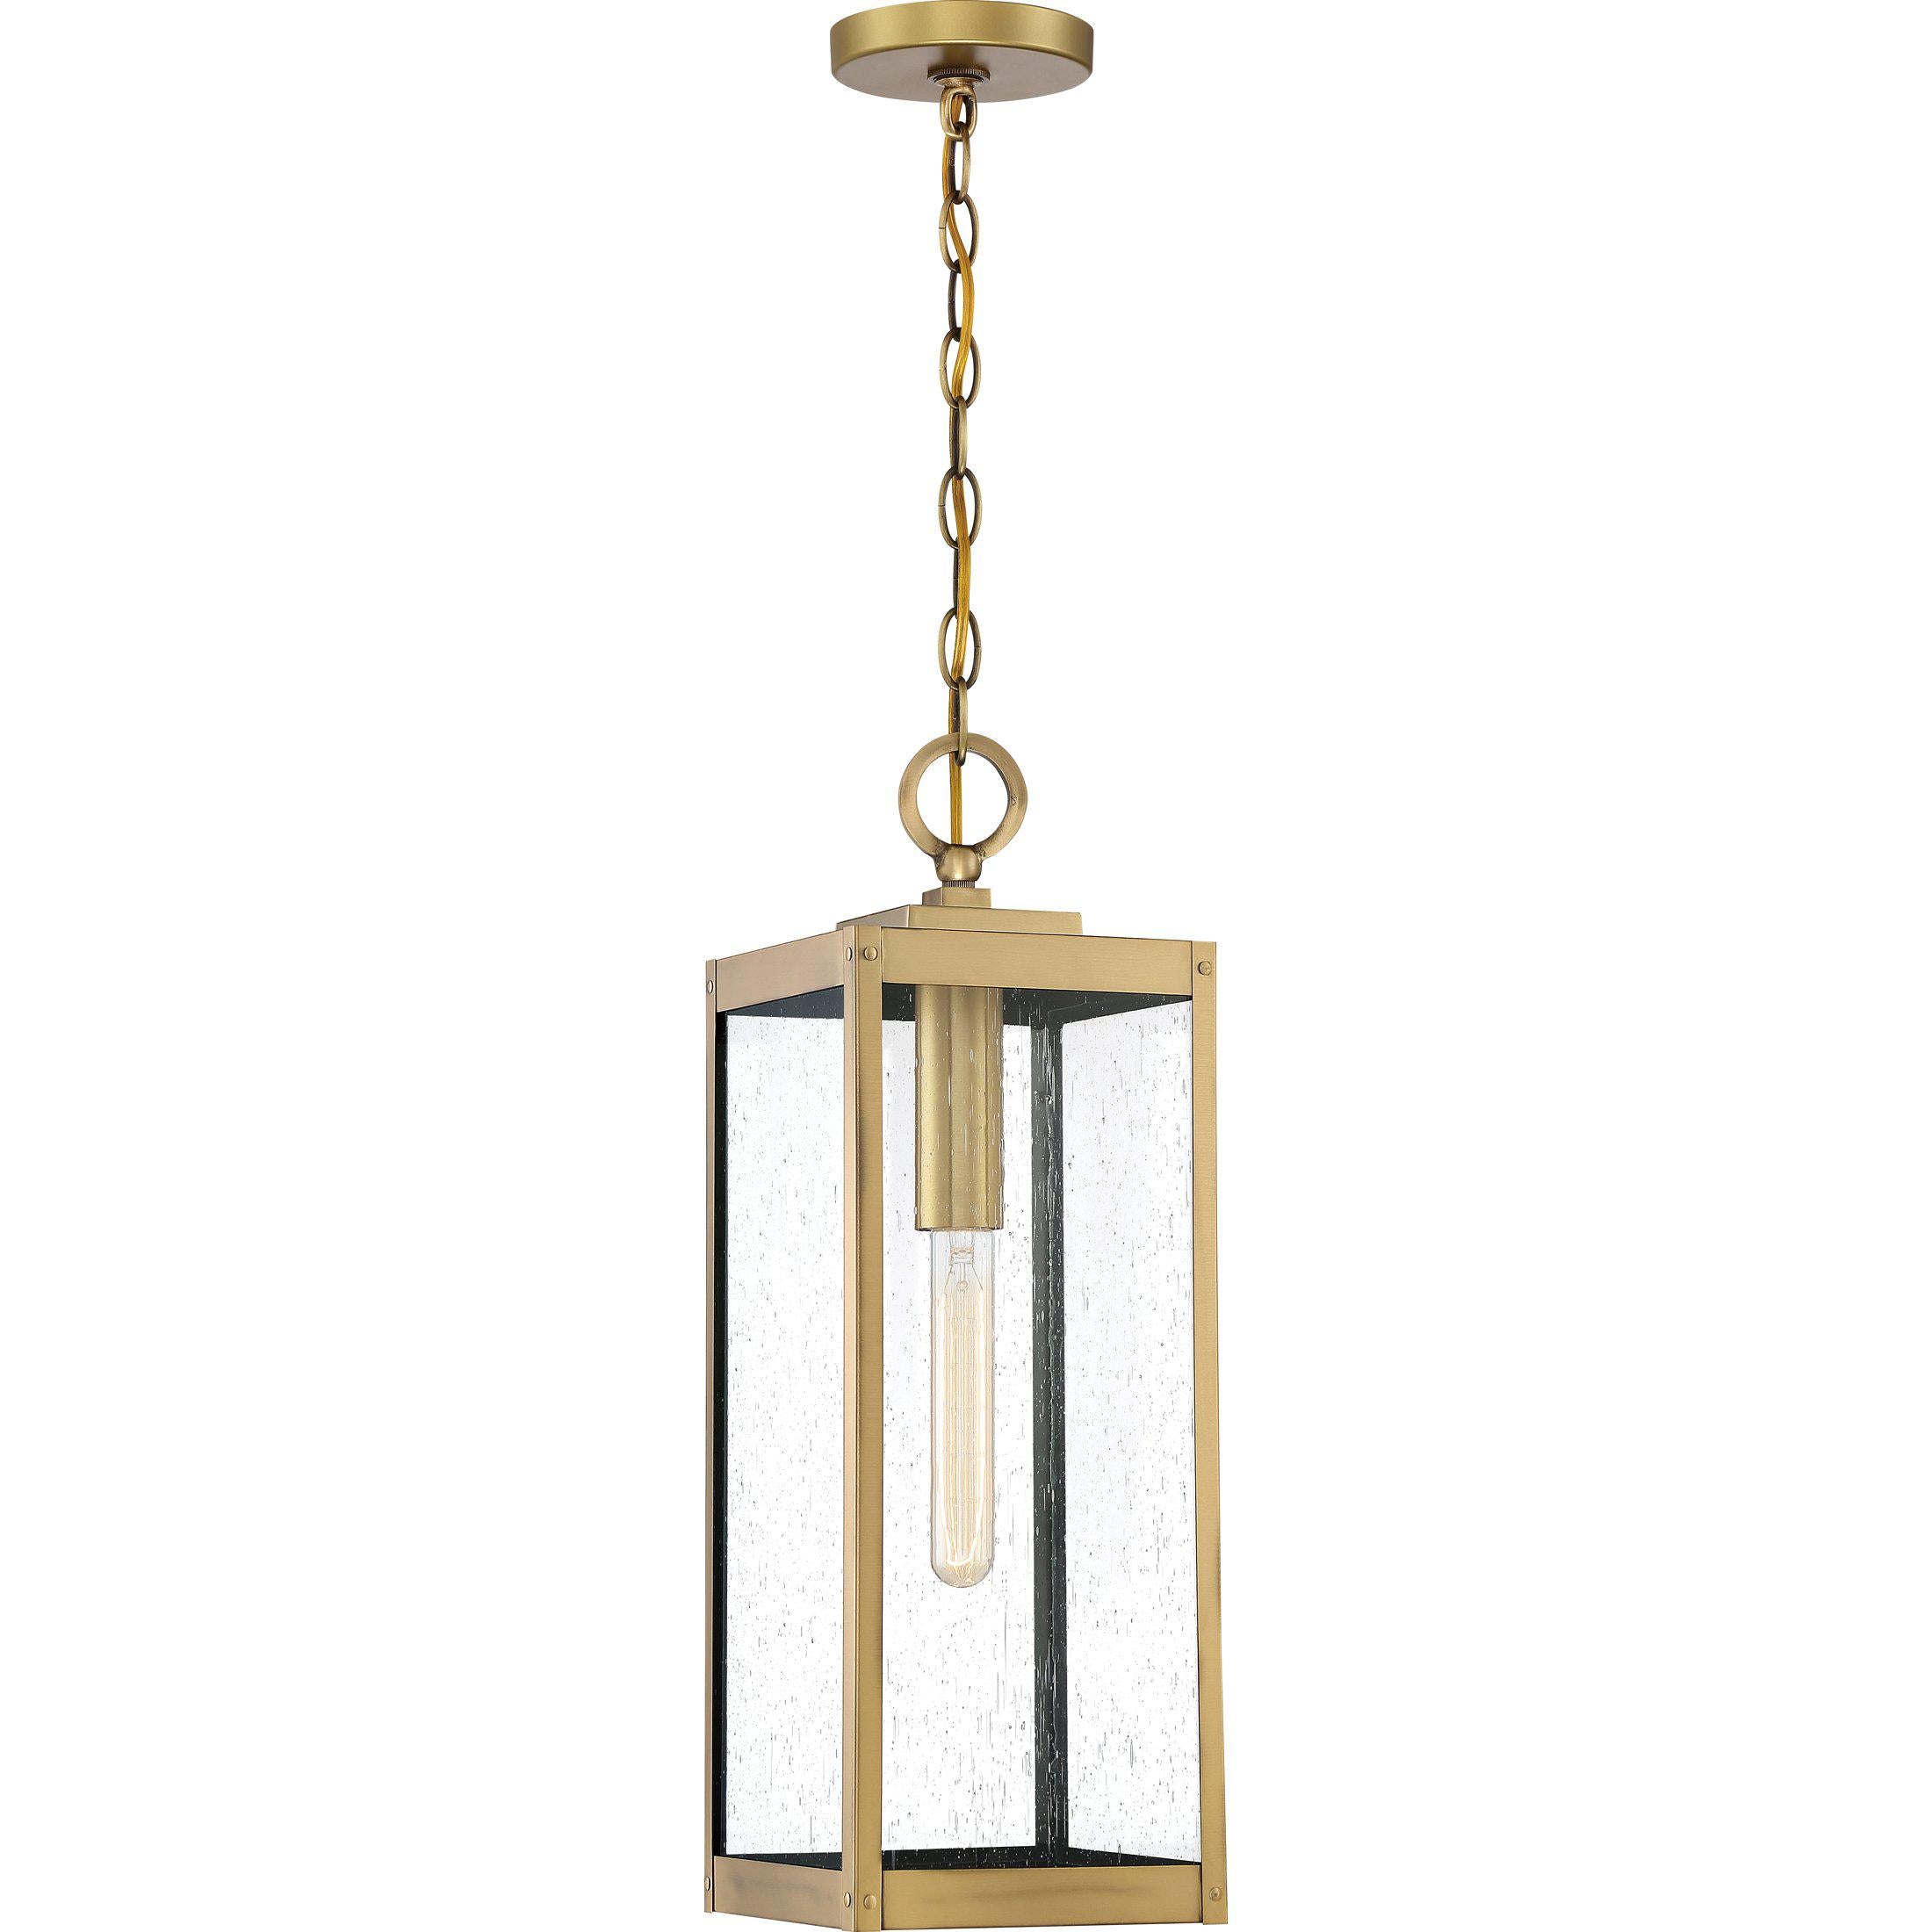 Quoizel  Westover Outdoor Lantern, Hanging Outdoor Light Fixture l Hanging Quoizel Antique Brass  